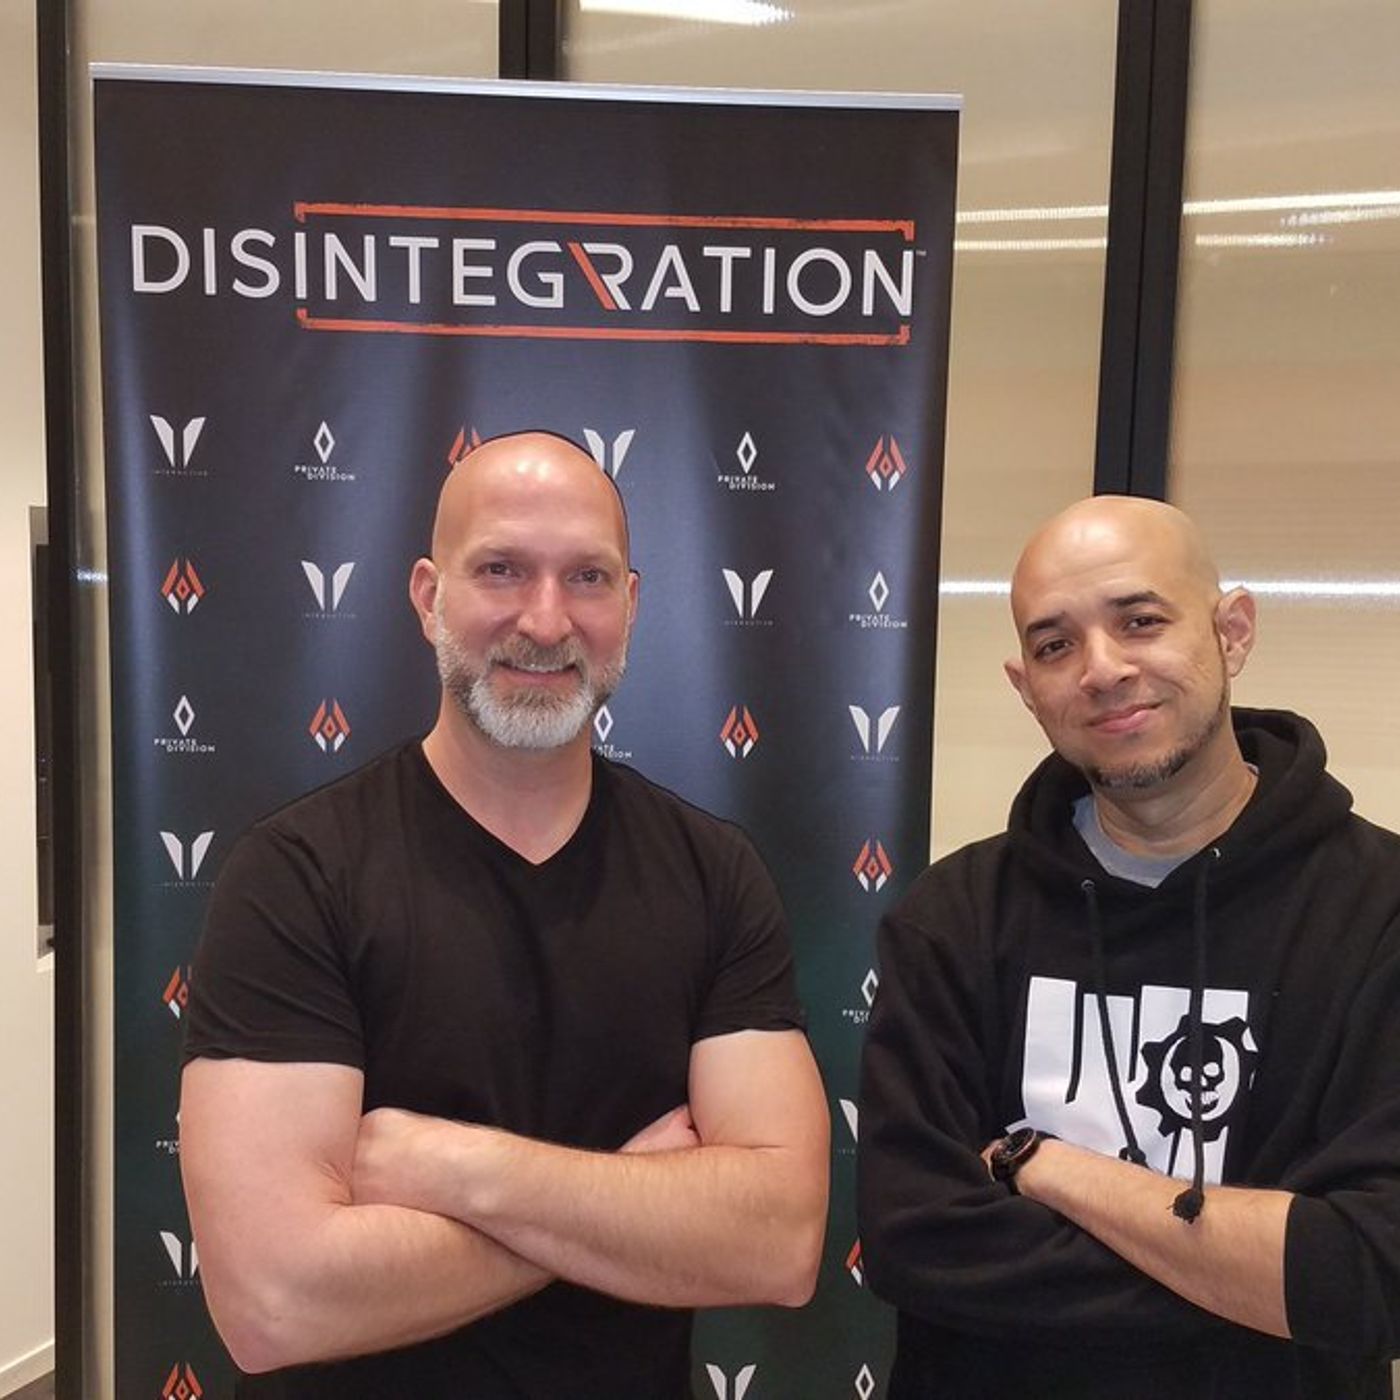 S14 Ep967: NYCC 2019: Disintegration Interview with Marcus Lehto